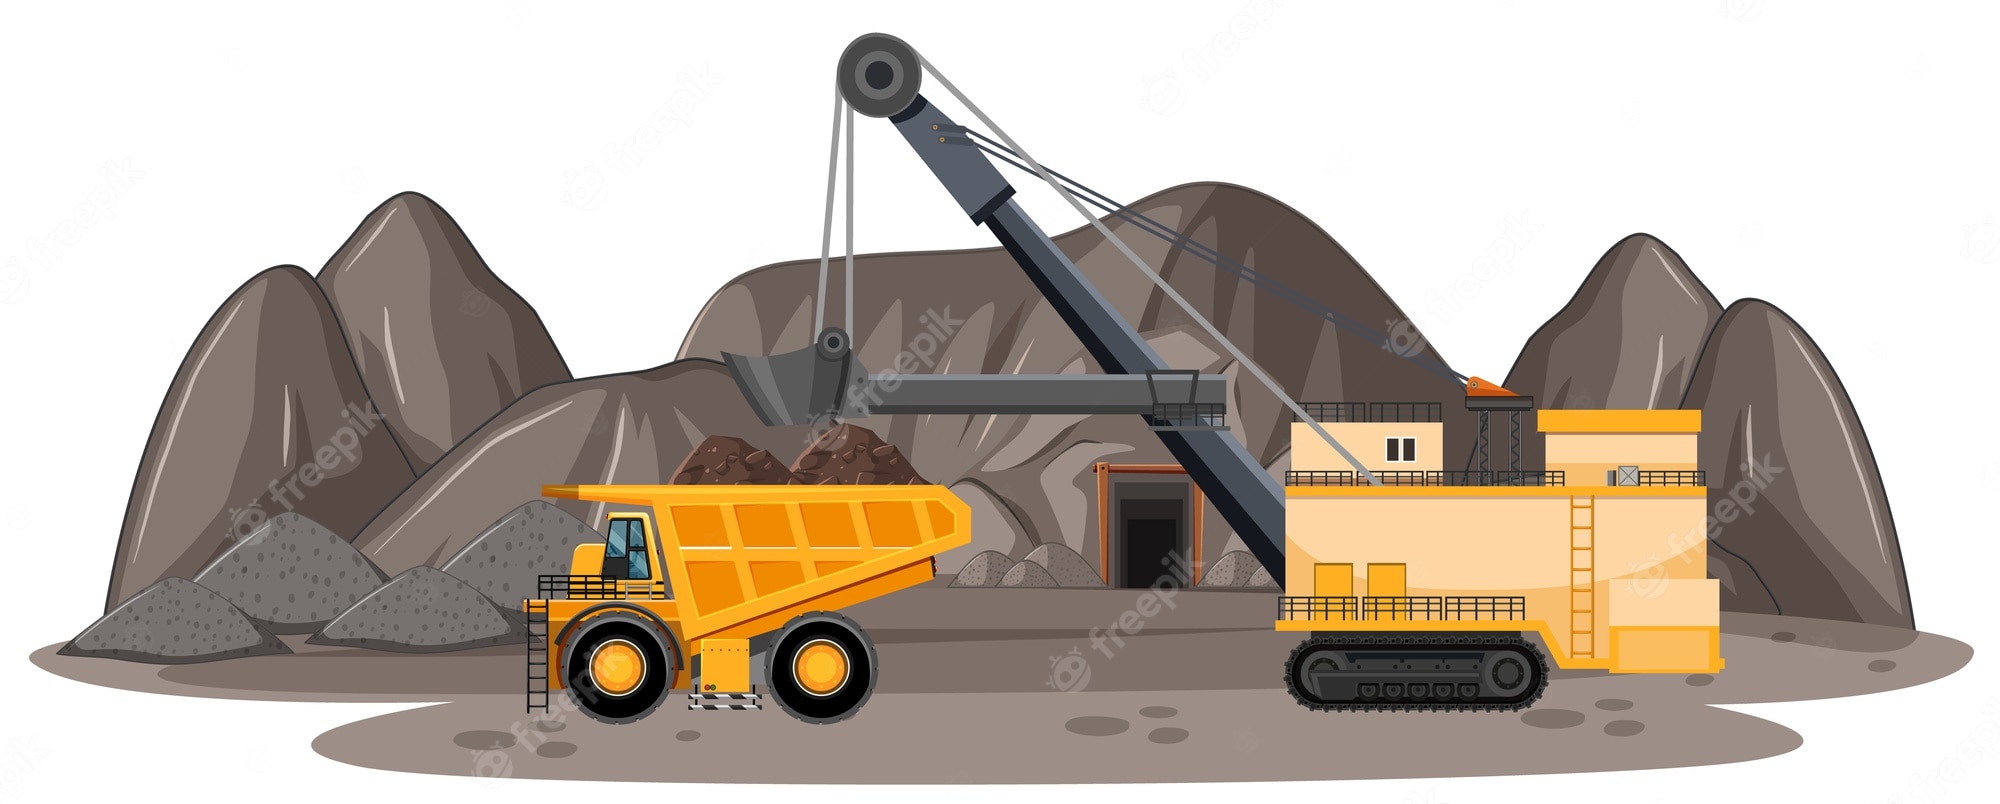 mining equipment clipart